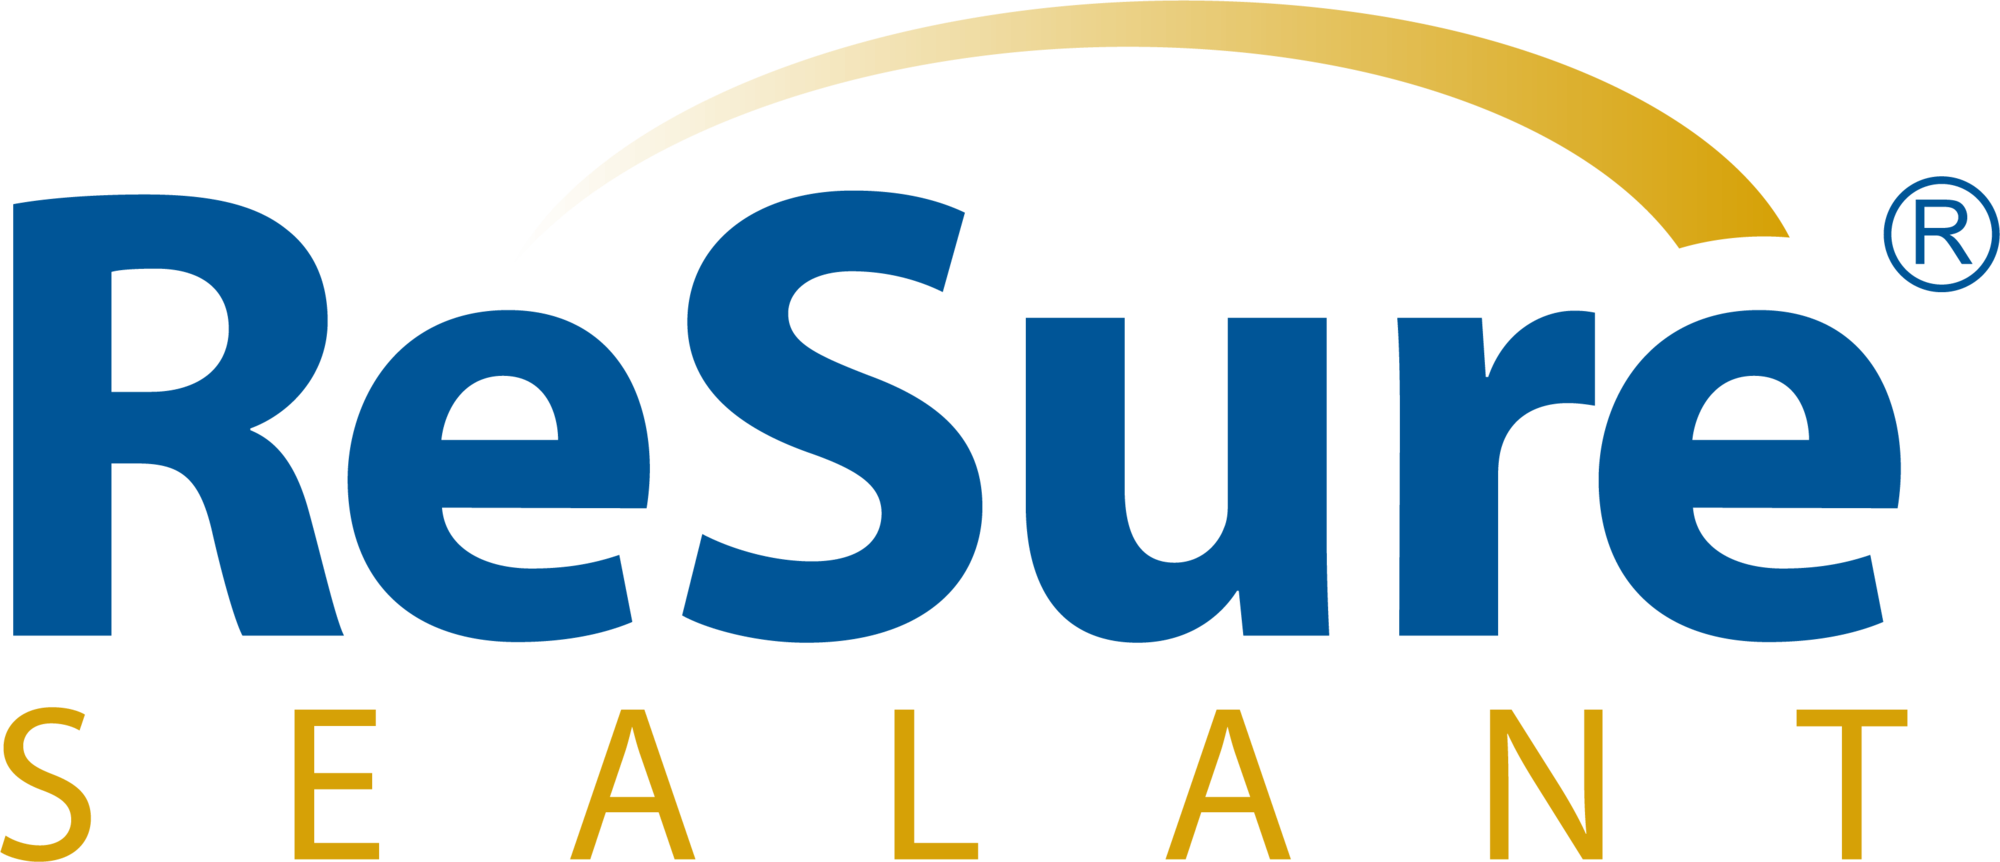 ReSure logo